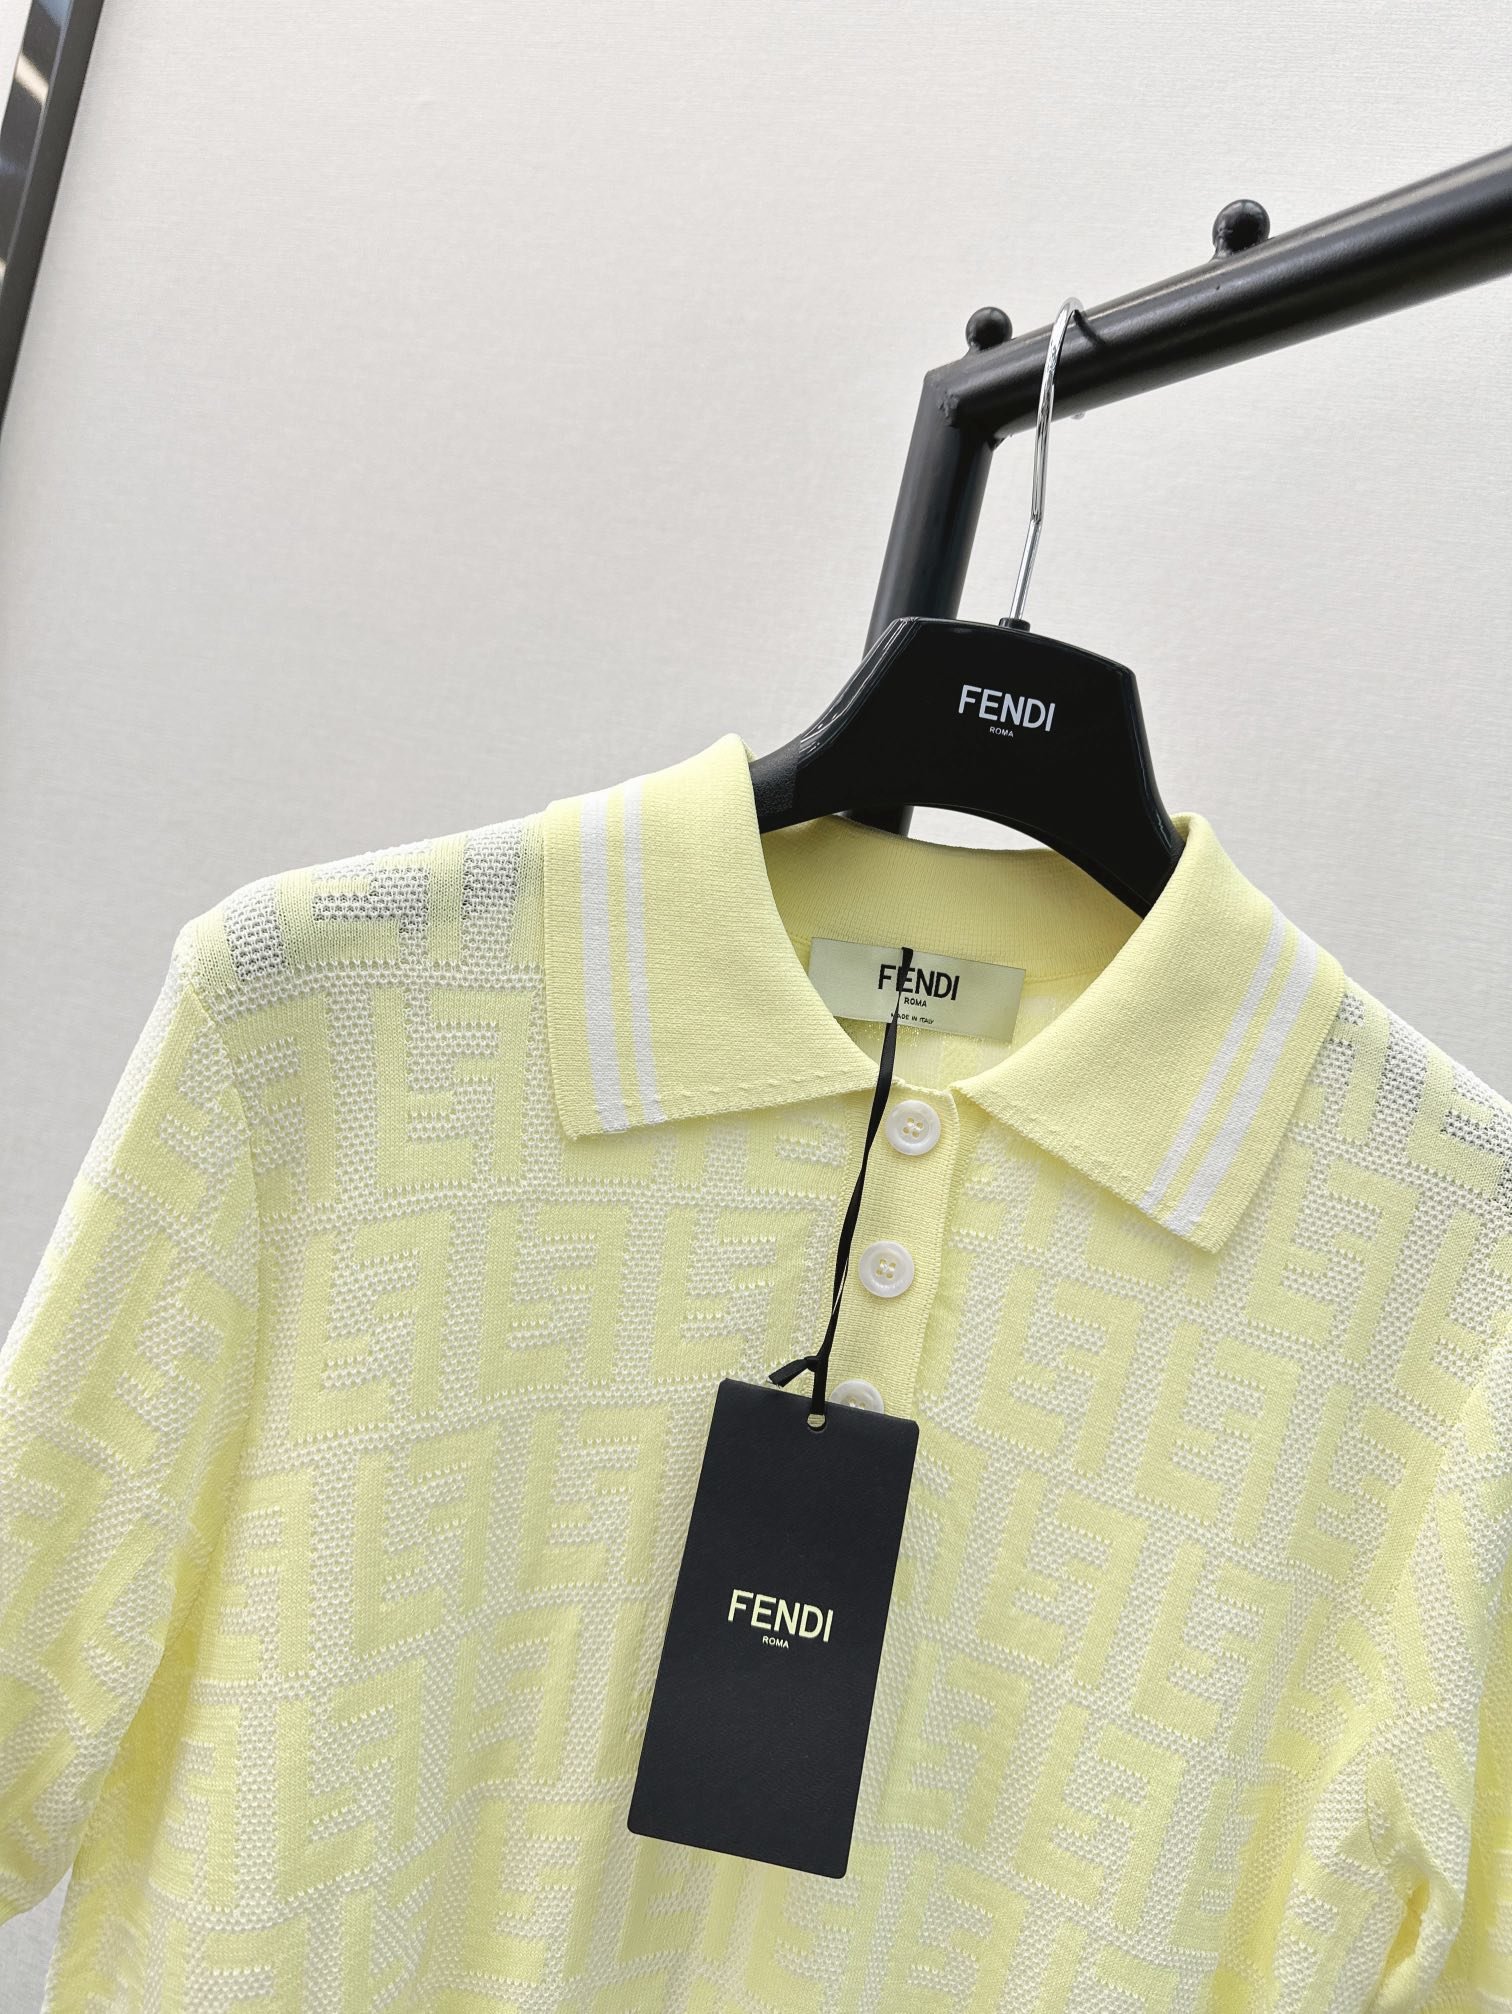 FD24Ss春夏最新款清新减龄风针织Polo短袖简约有层次不挑场合完全靠穿搭成就自我风格的单品！最爱针织